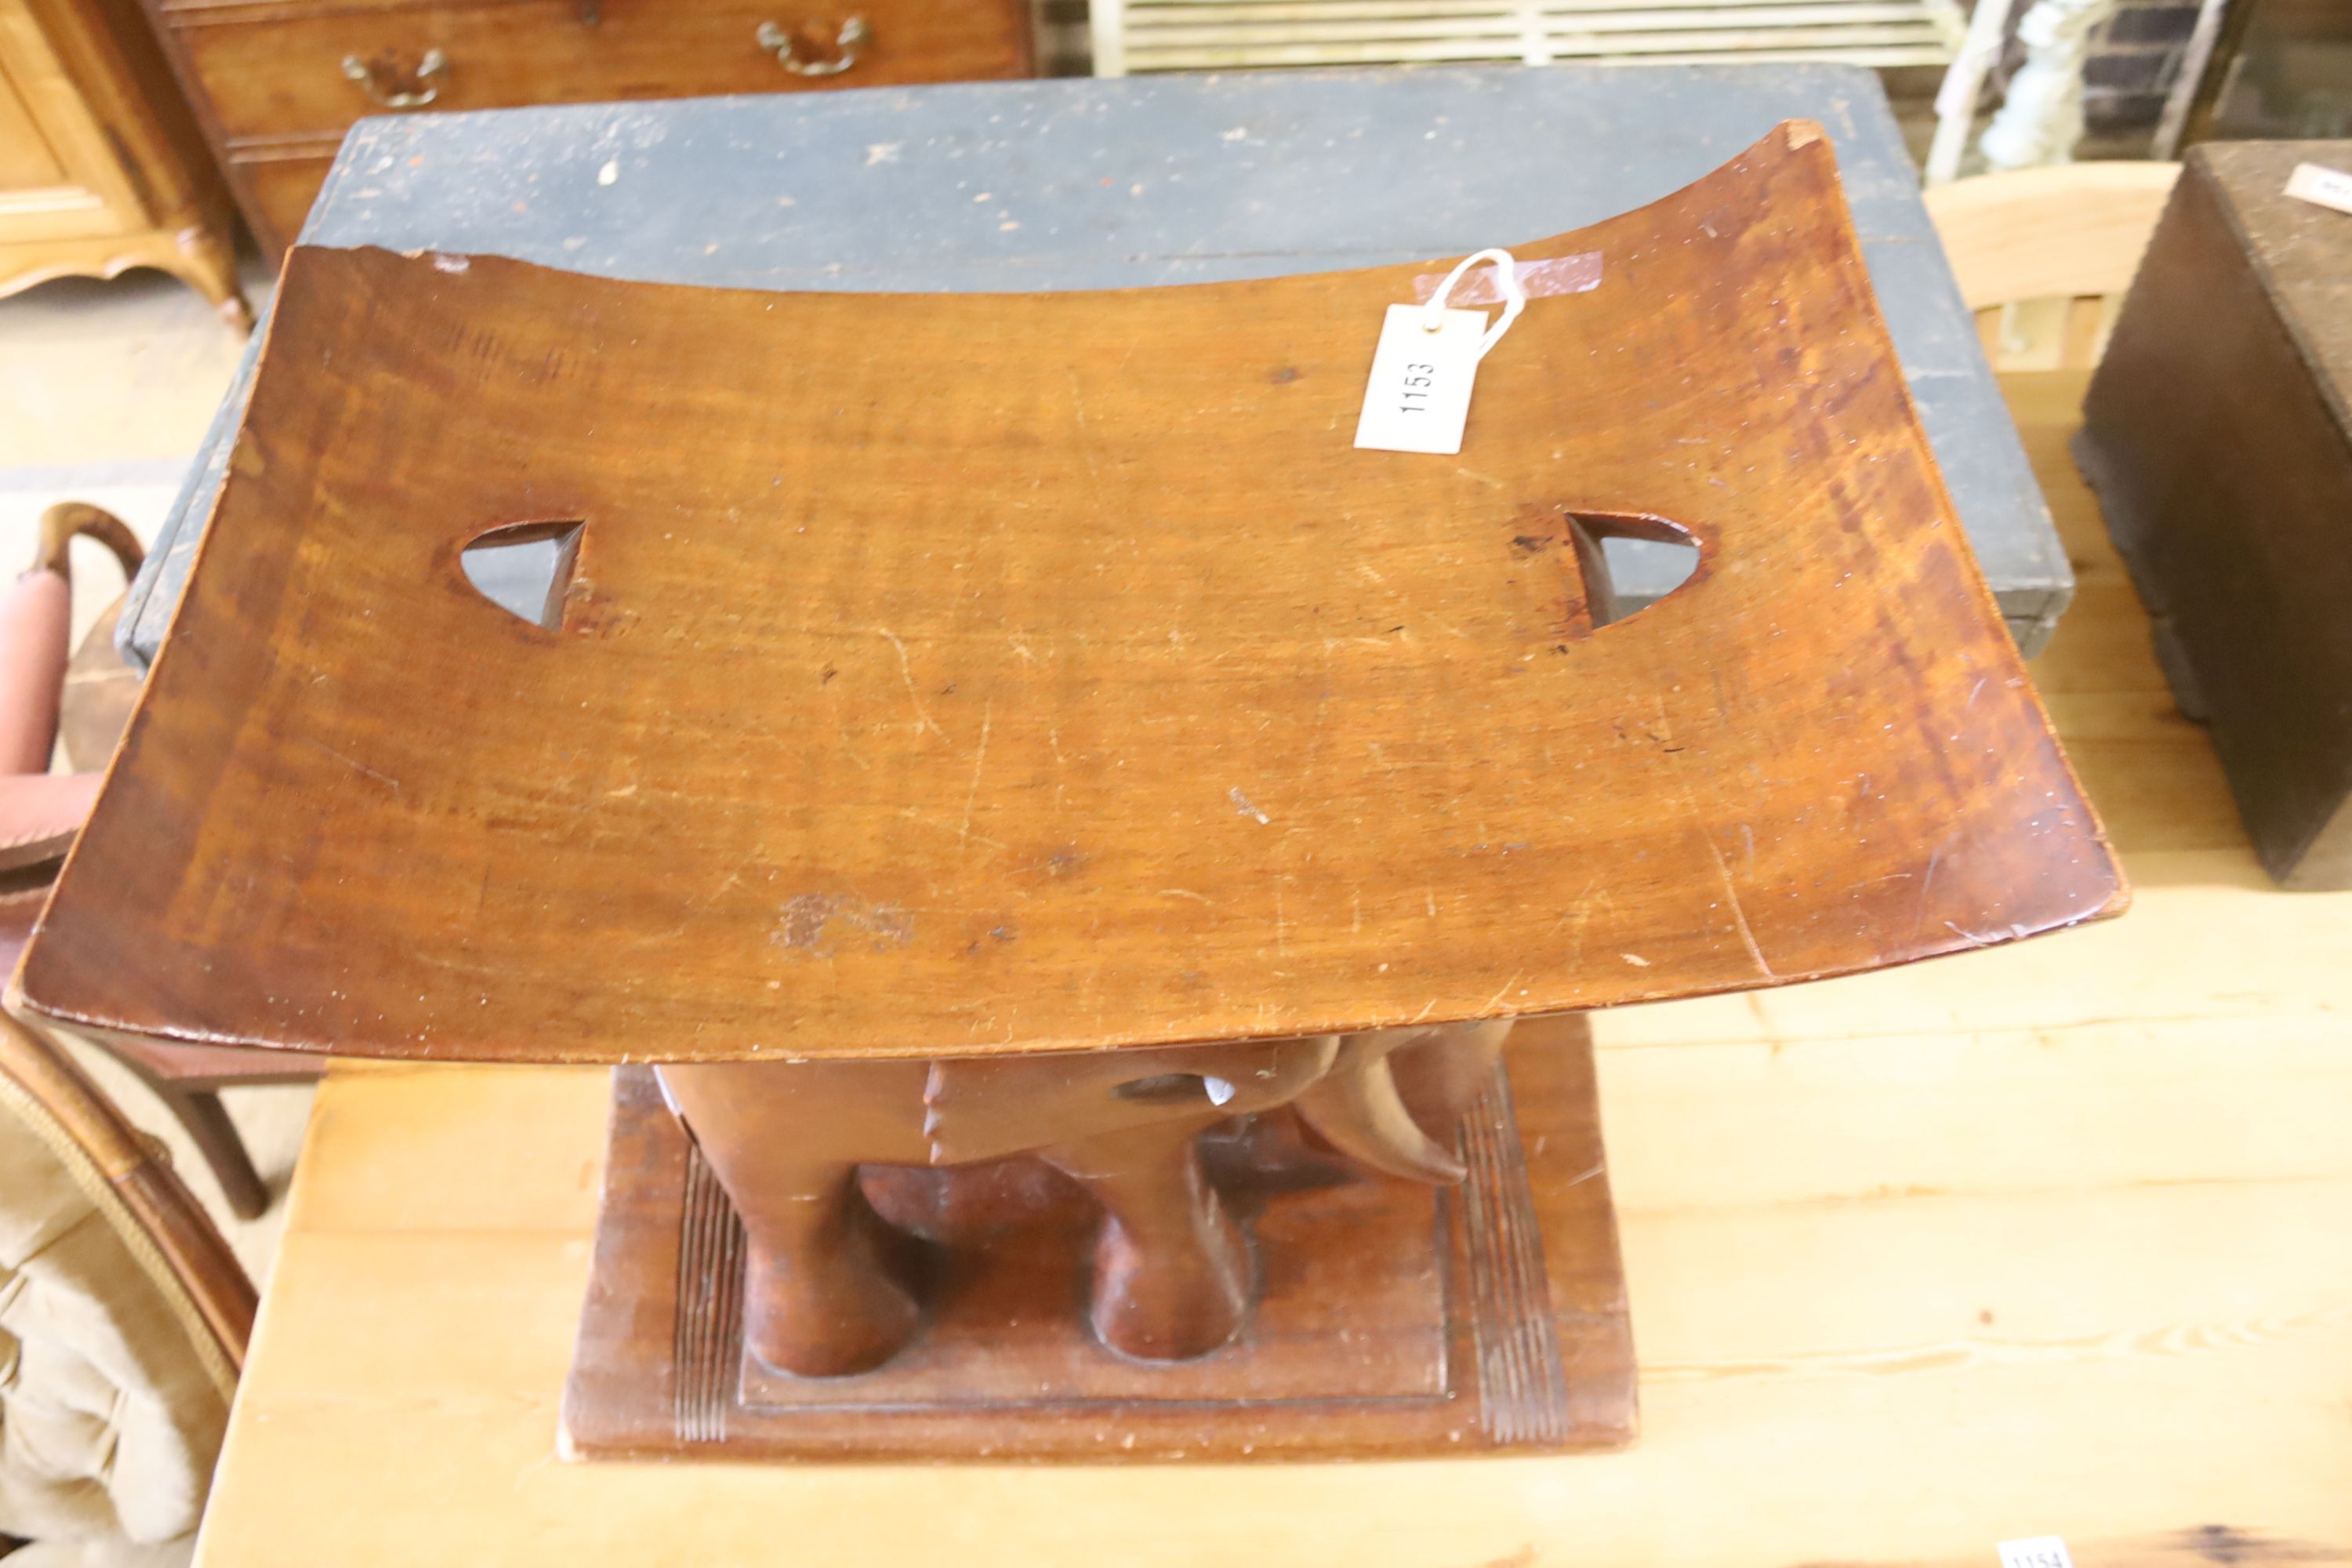 An Ashanti carved elephant stool, width 55cm, depth 26cm, height 58cm